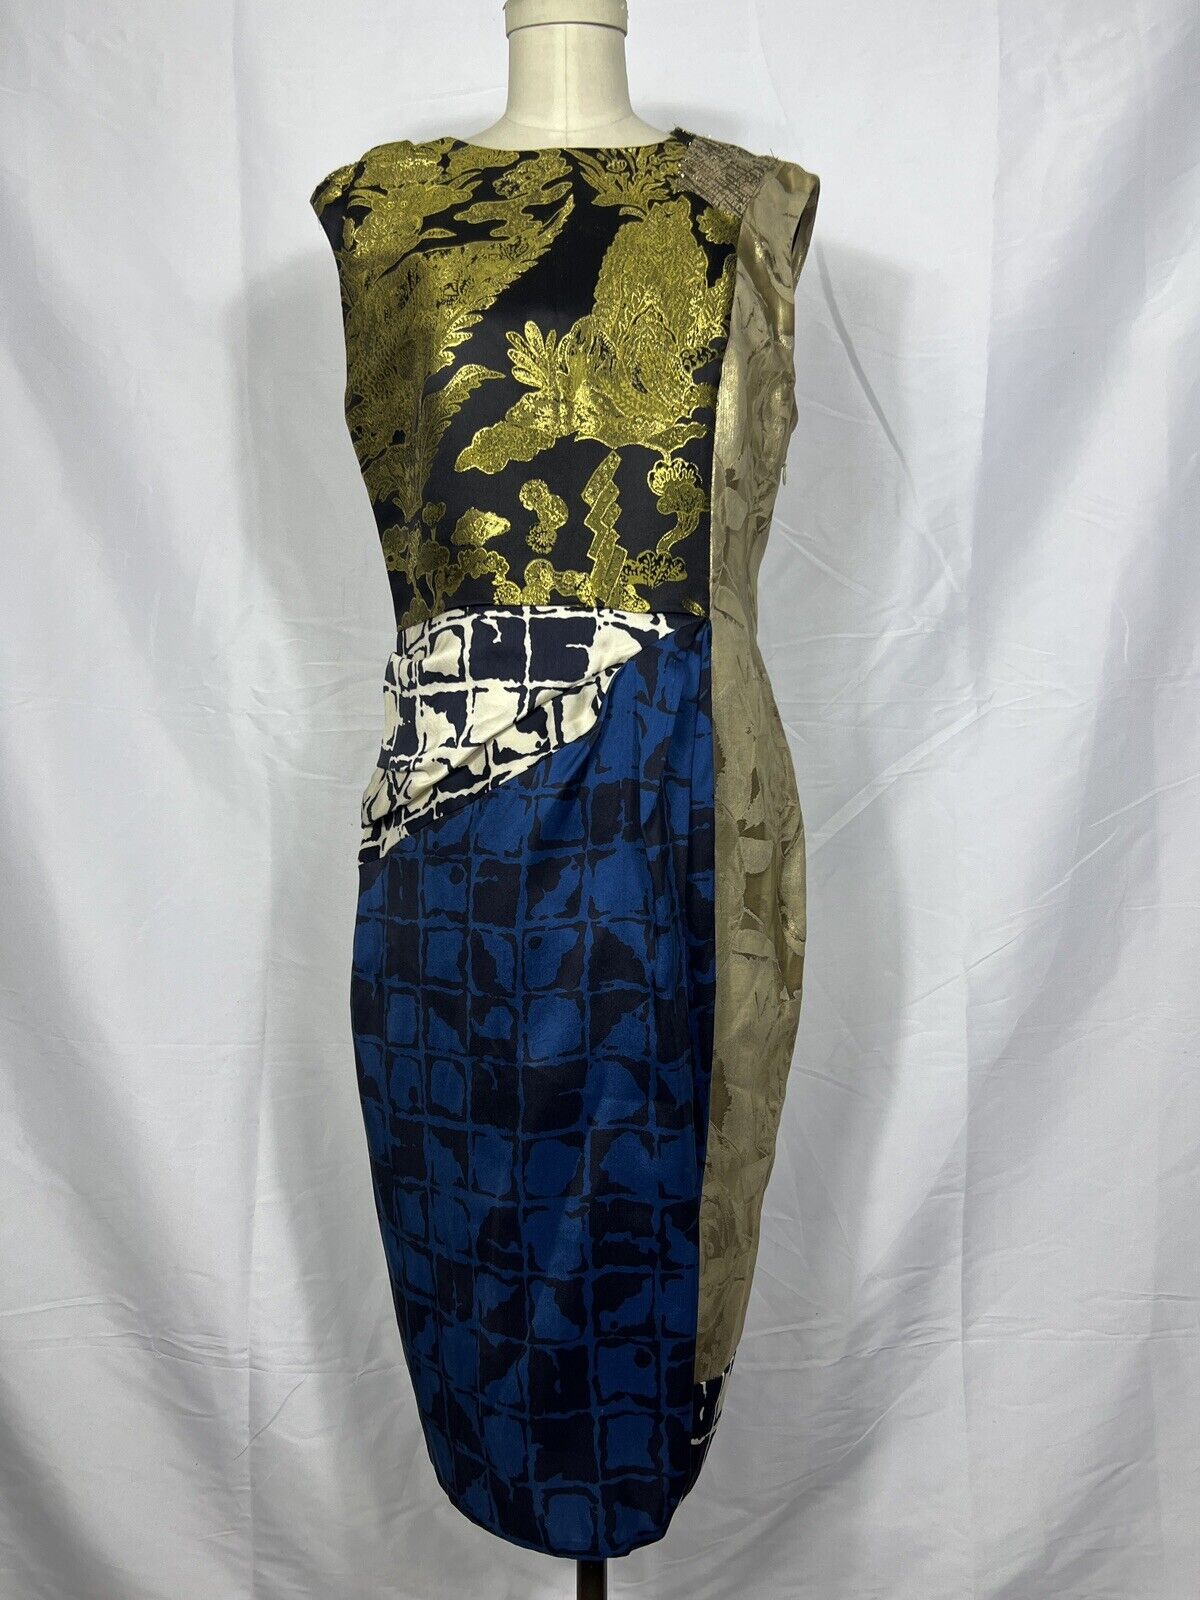 DRIES VAN NOTEN  Vintage  Bodycon Dress  Italy Made Size 42